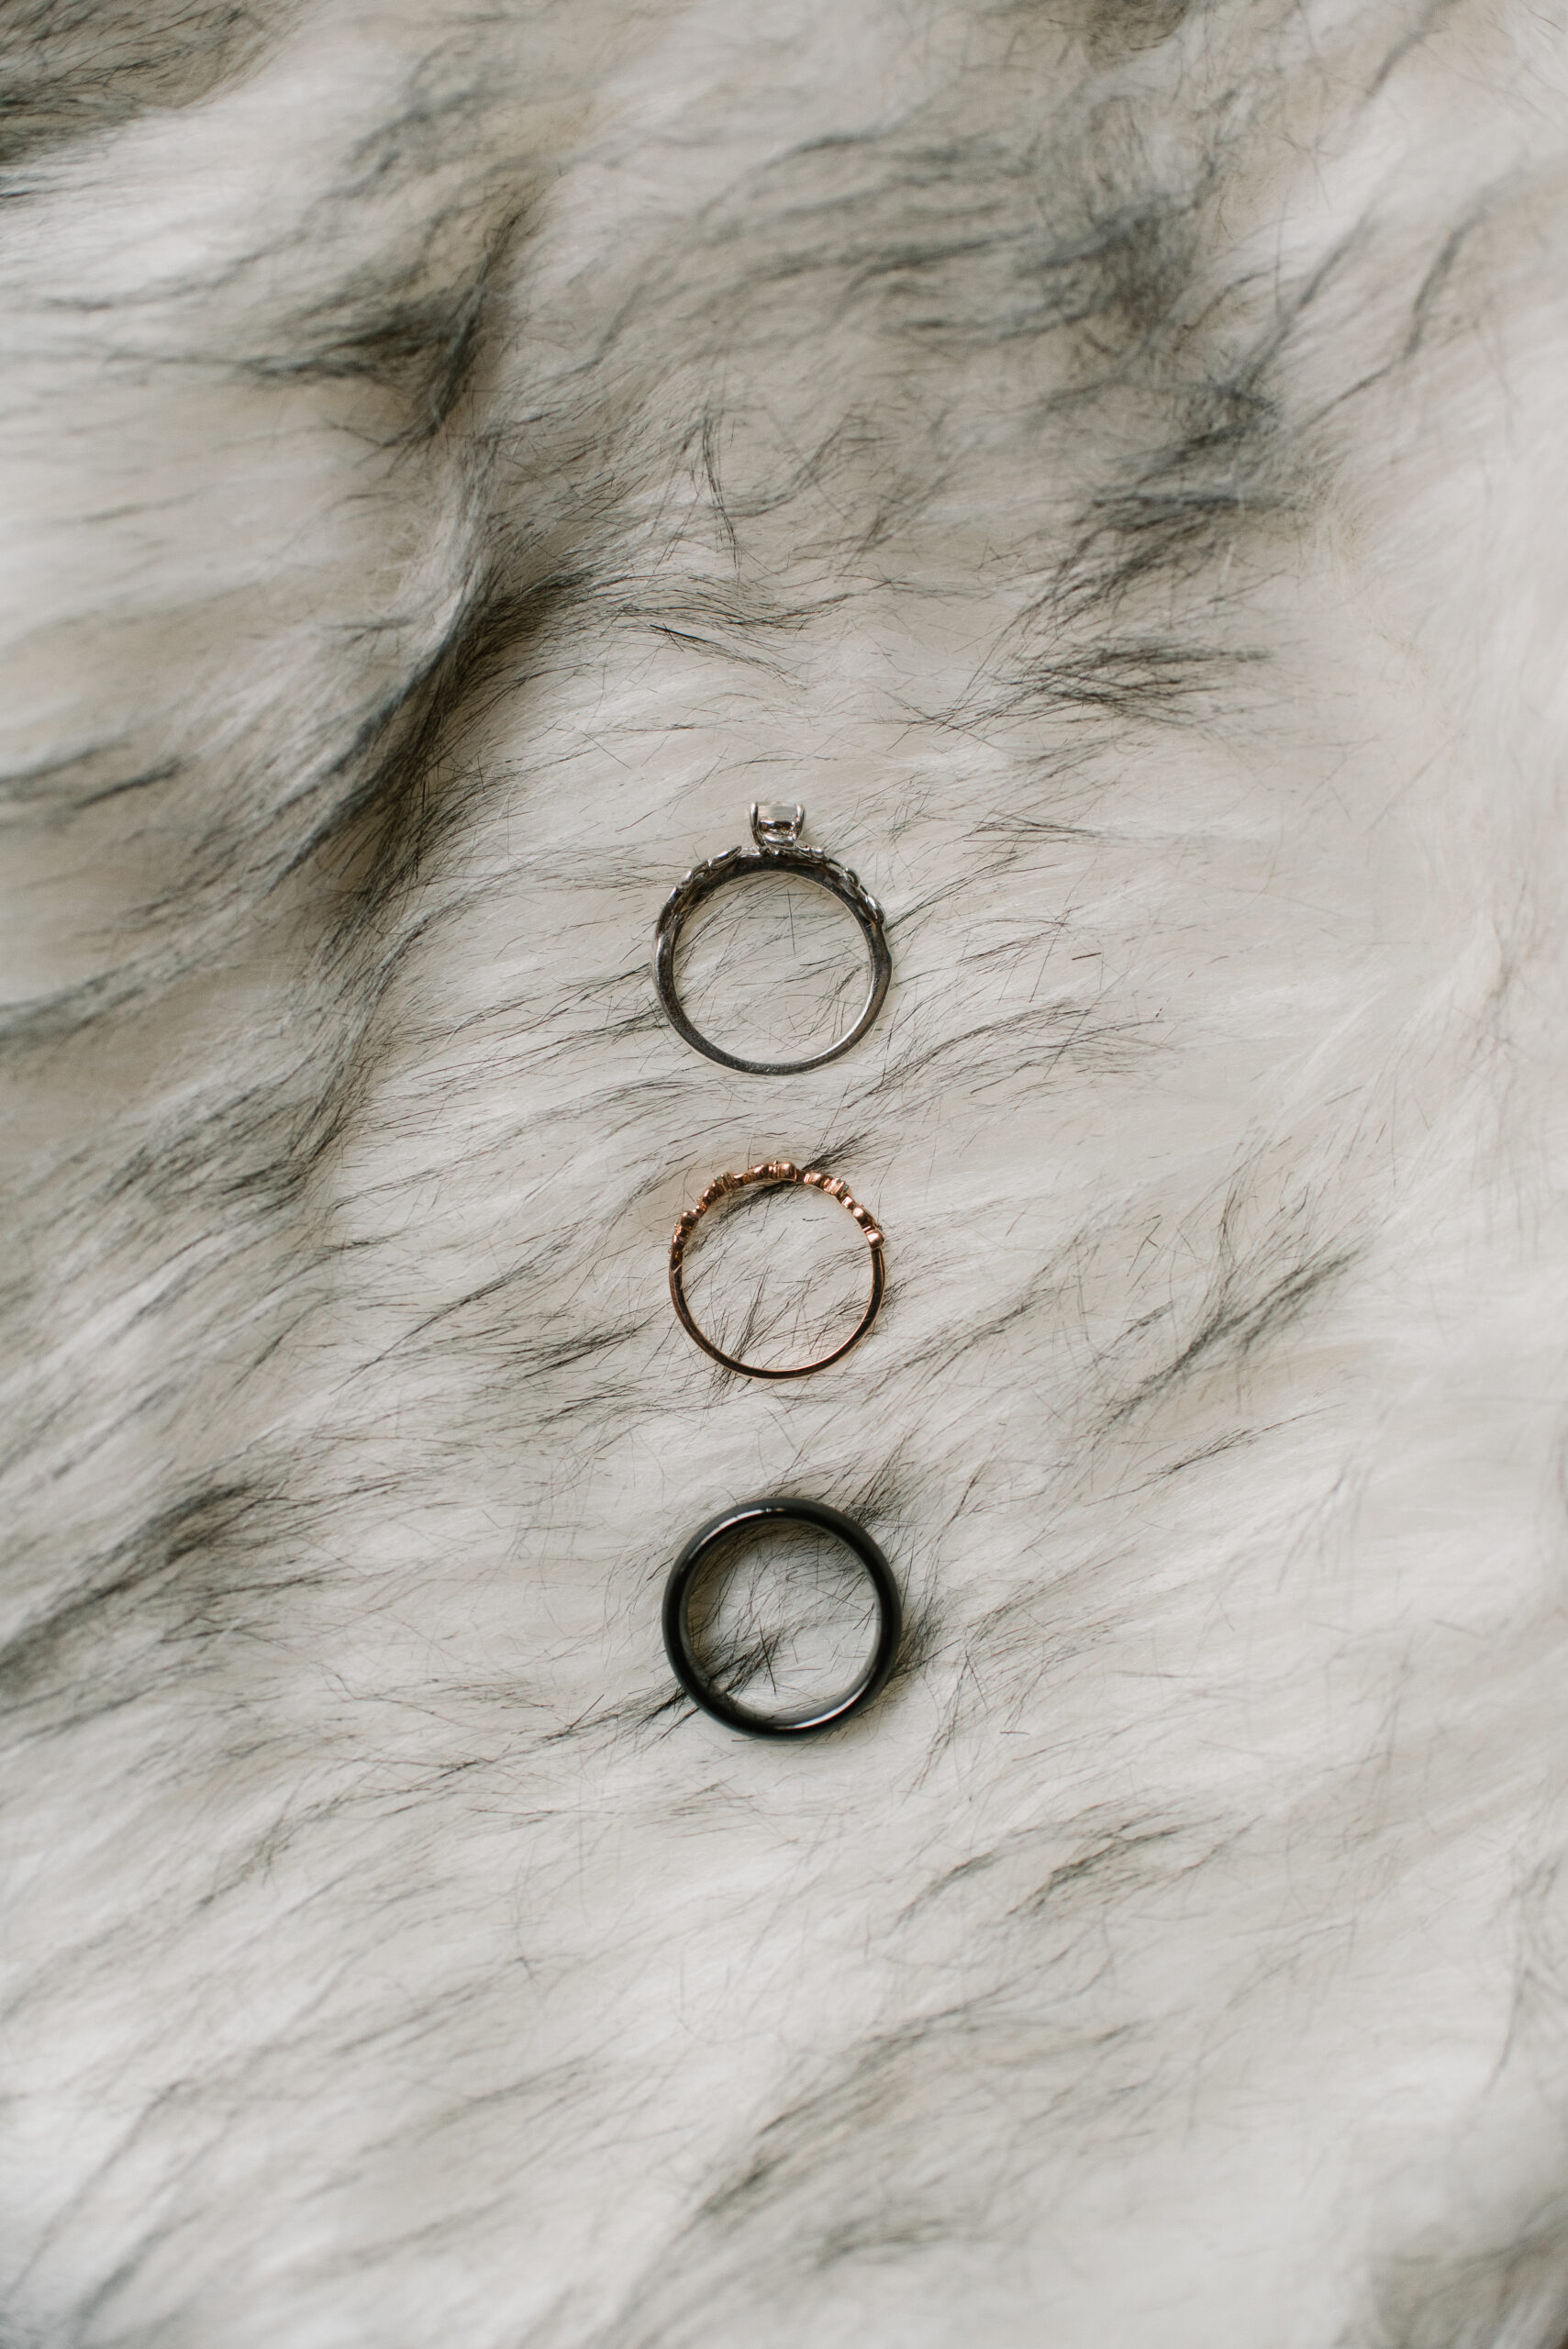 wedding rings on a fur coat 